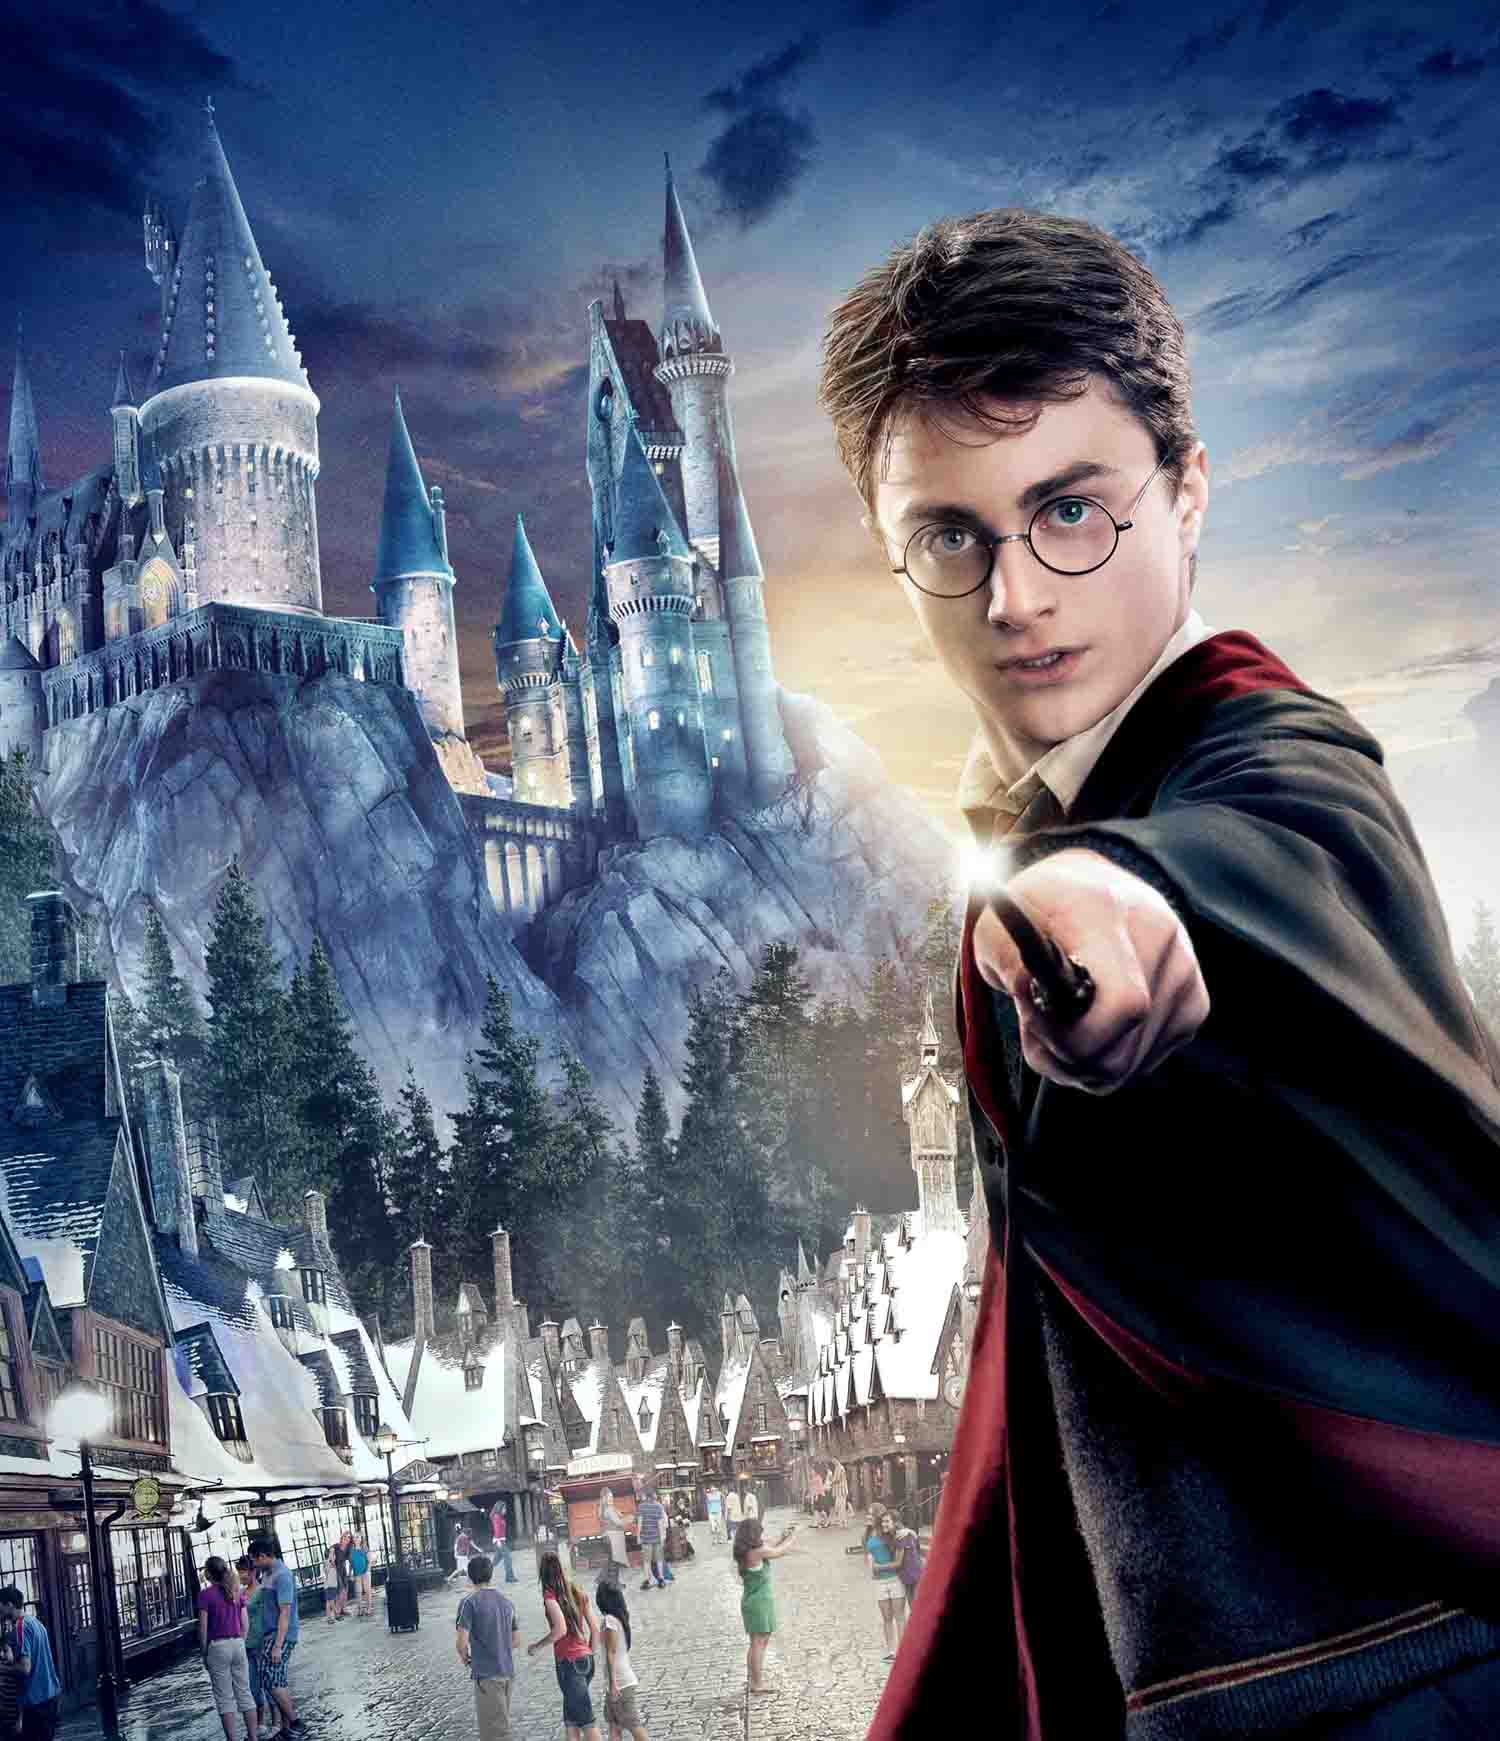 Wizarding world of Harry potter